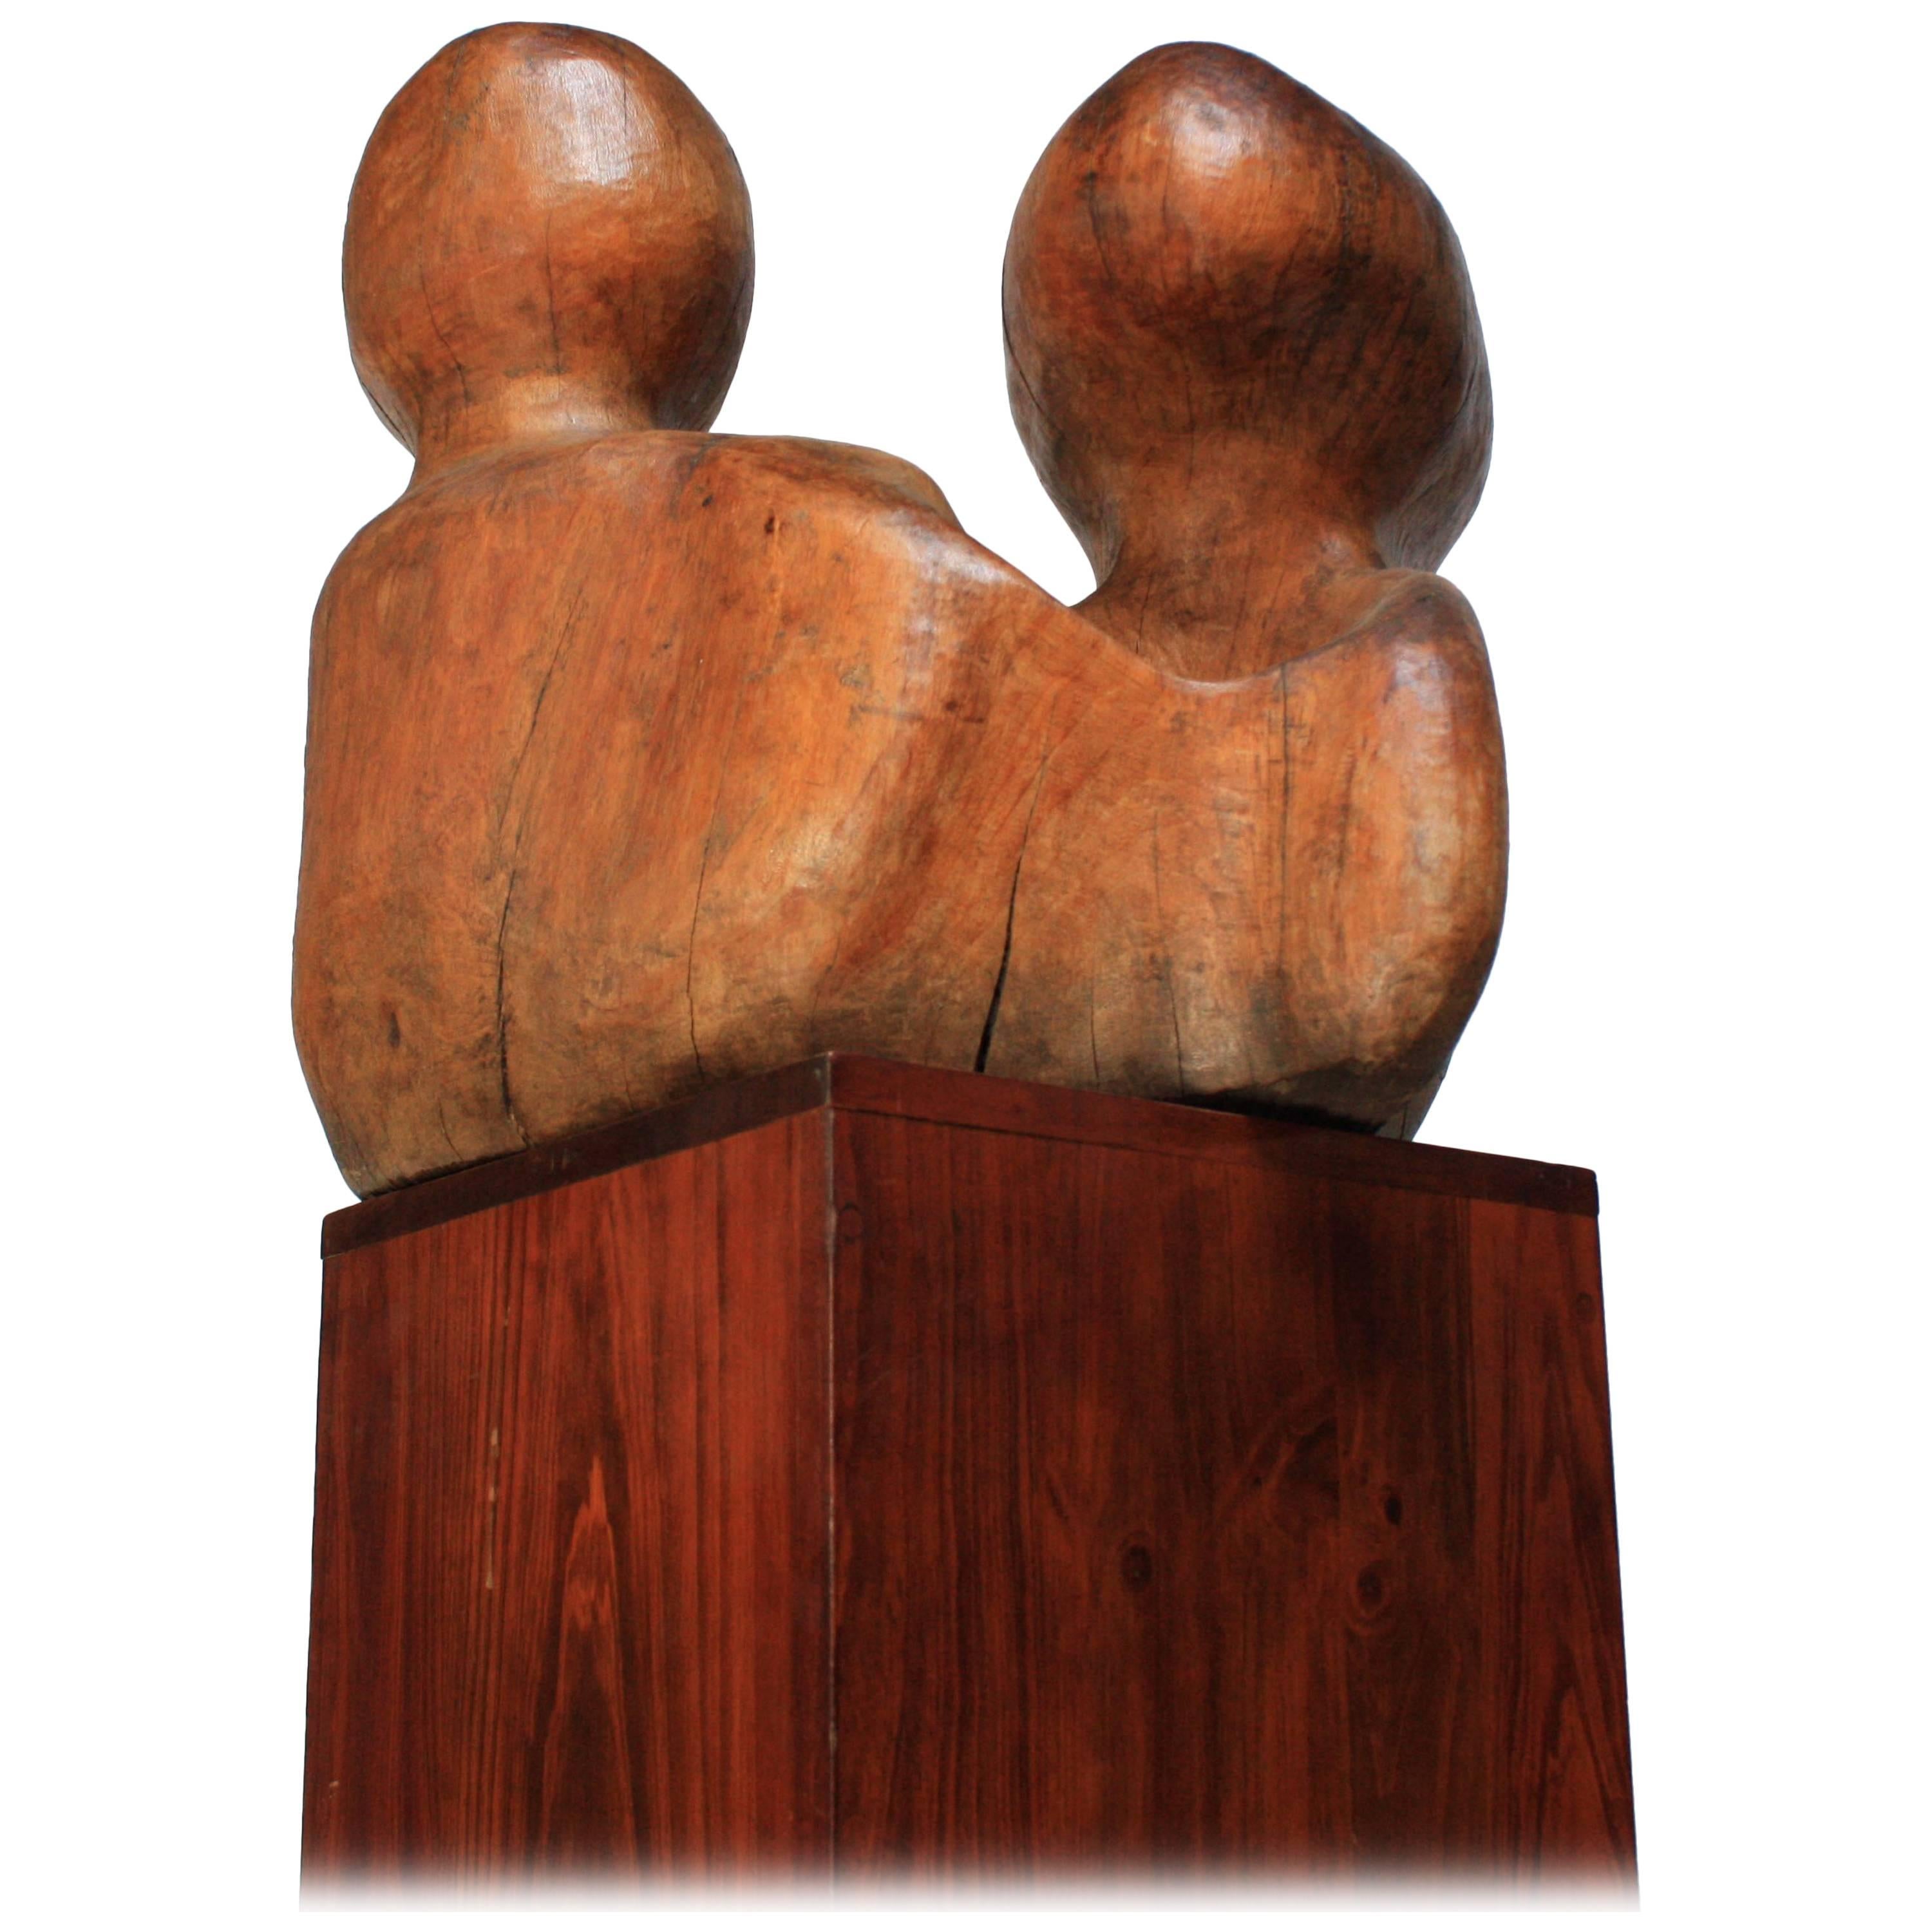 Free-Form Burl Wood 'Head' Sculpture